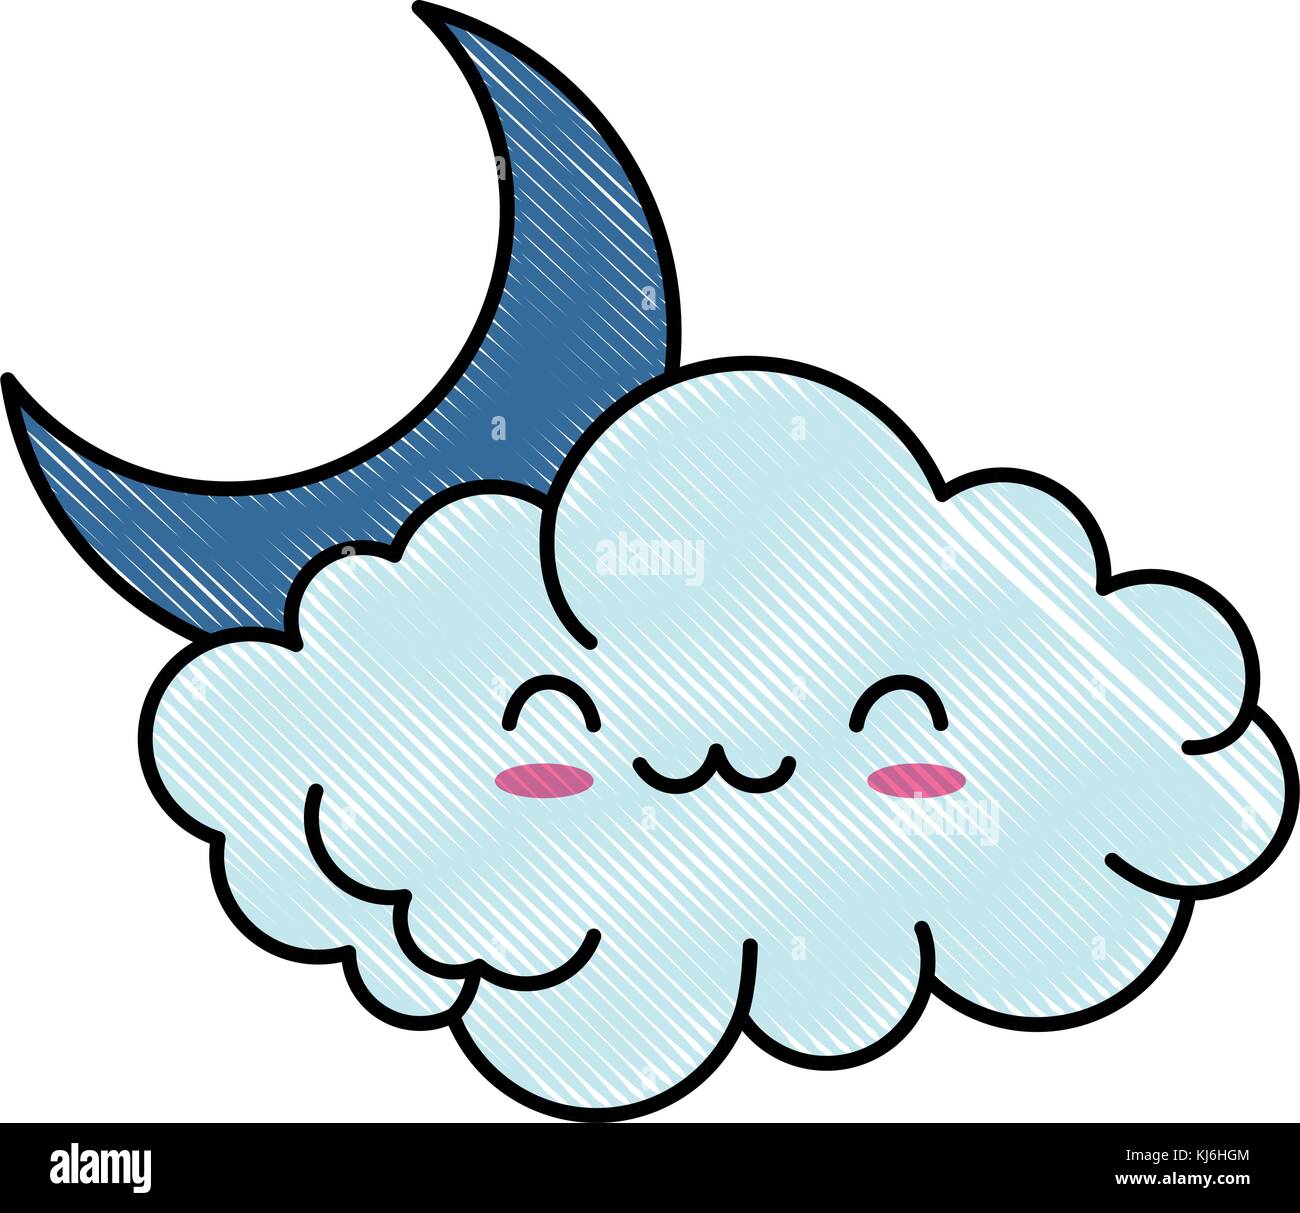 Süße Wolke mit Mond kawaii Charakter Stock-Vektorgrafik - Alamy